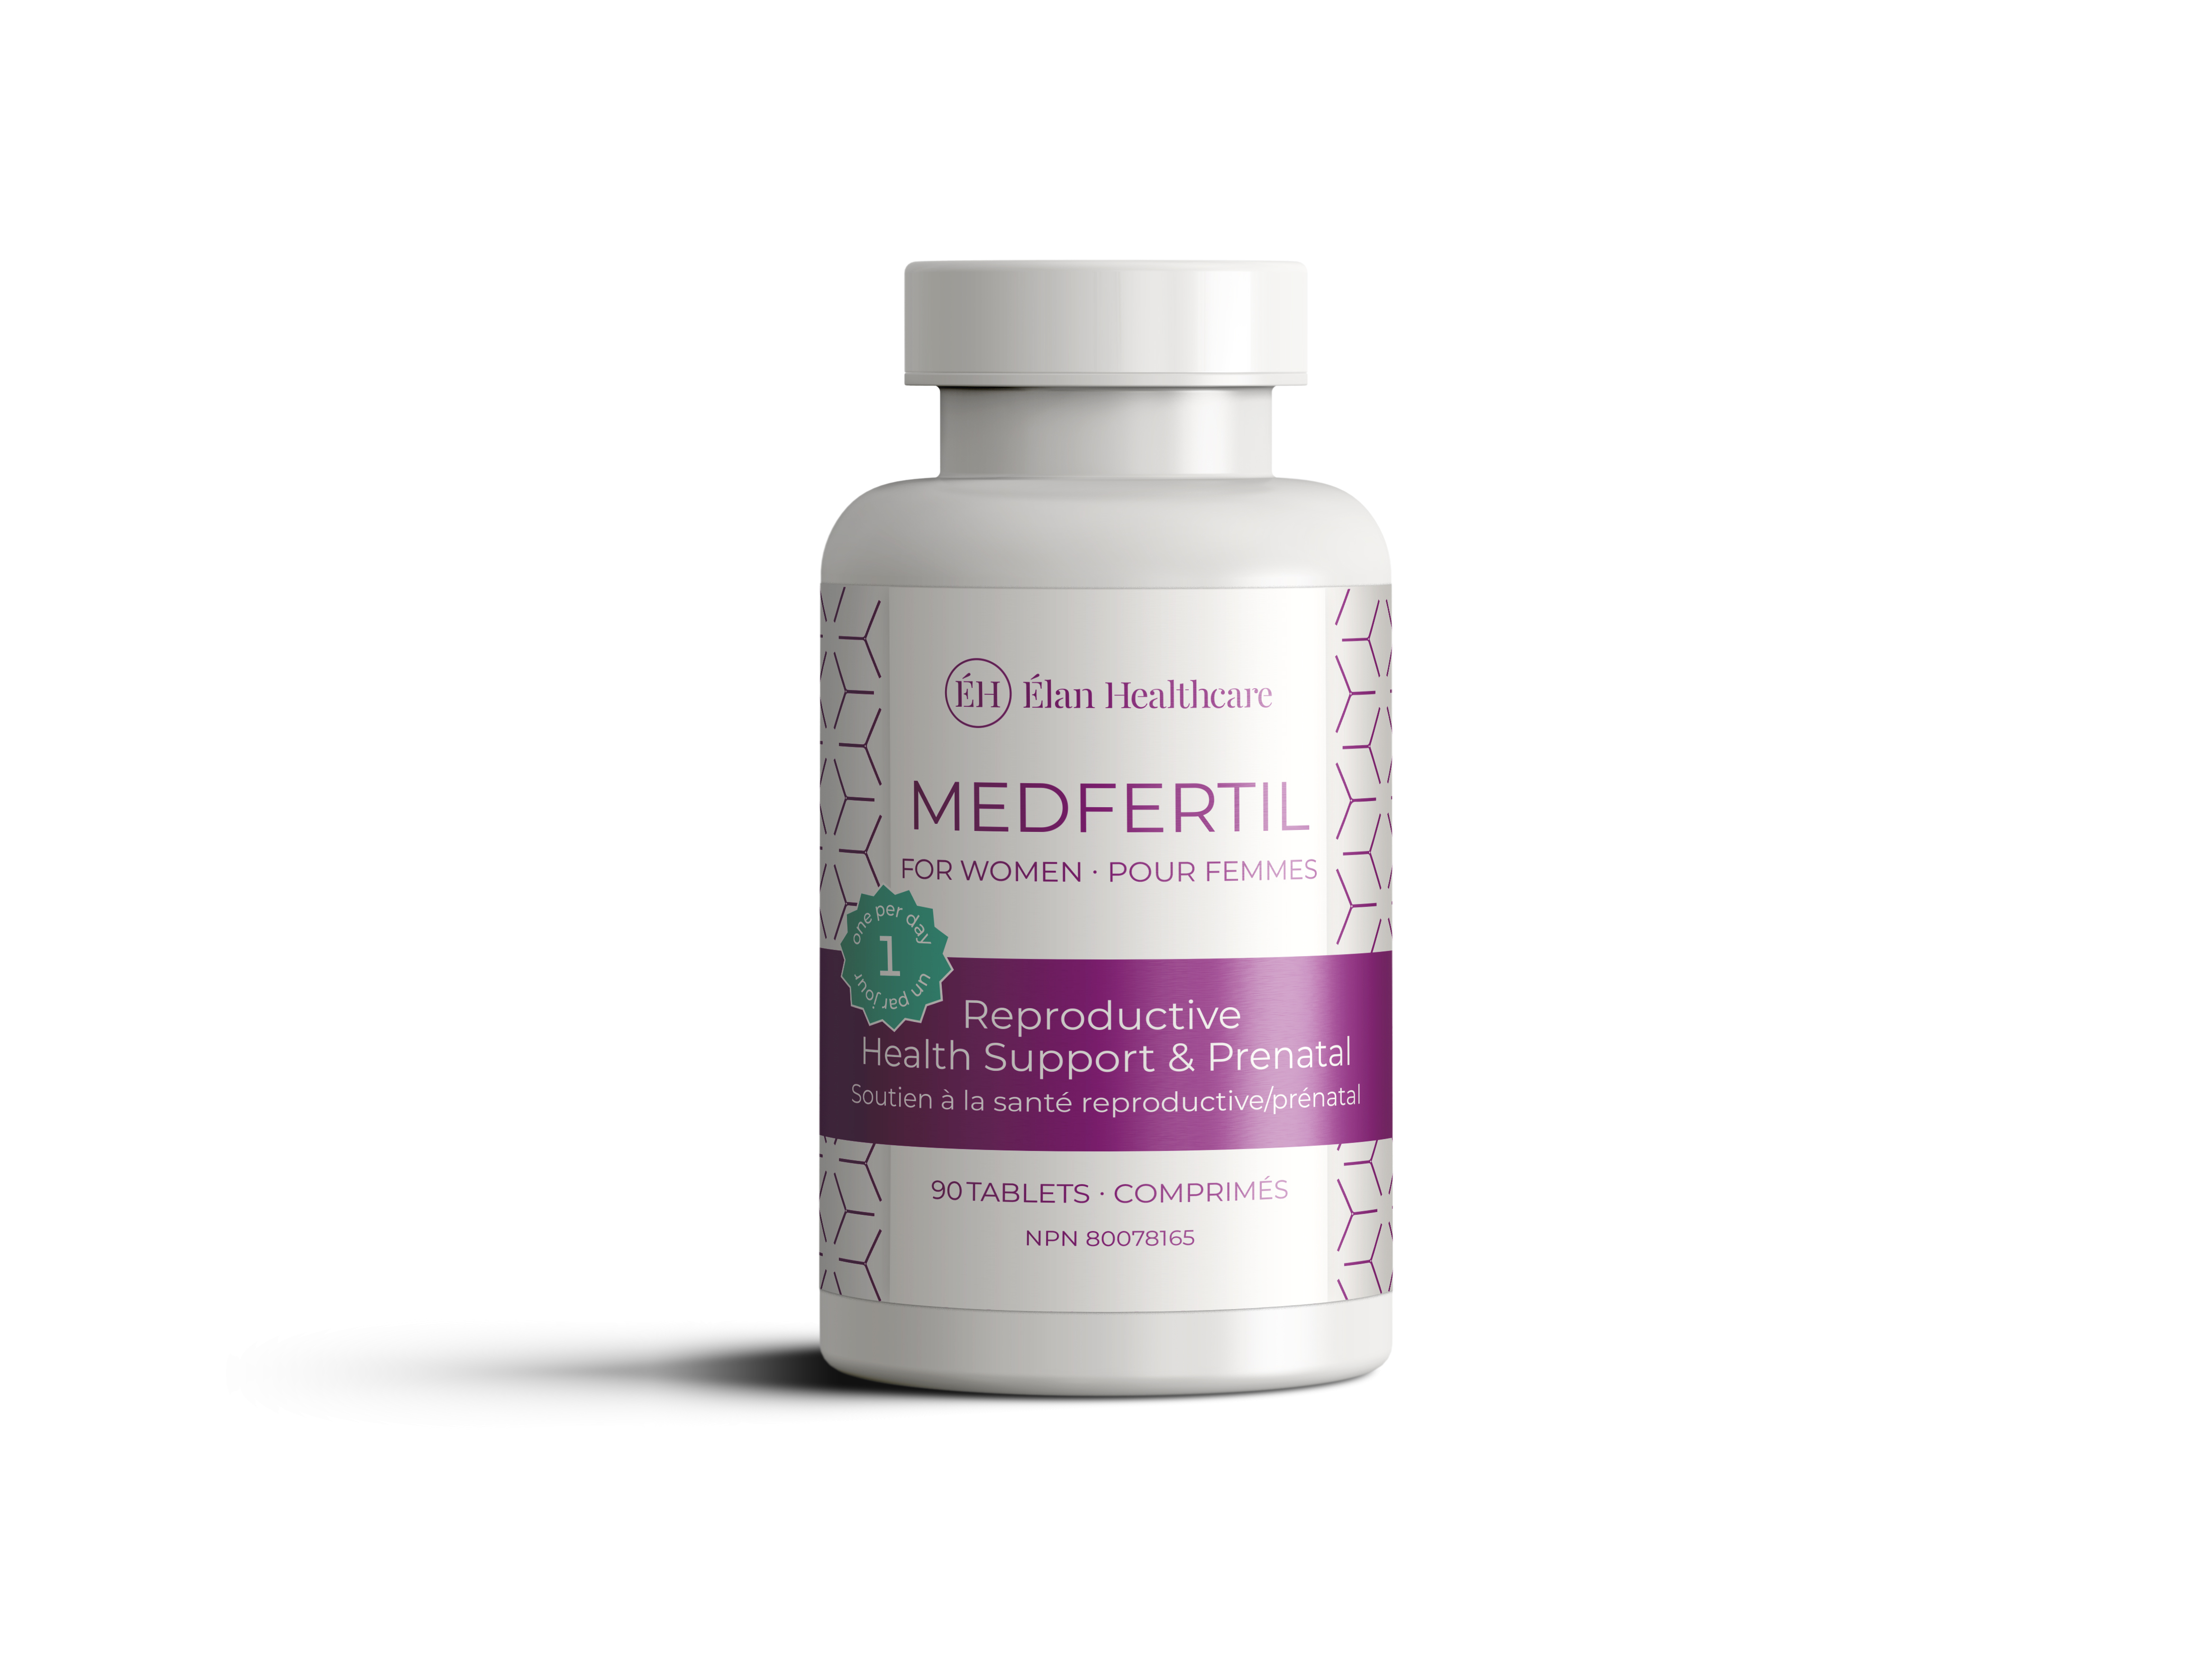 MedFertil for Women: Conception Pills and Fertility Supplements for Women